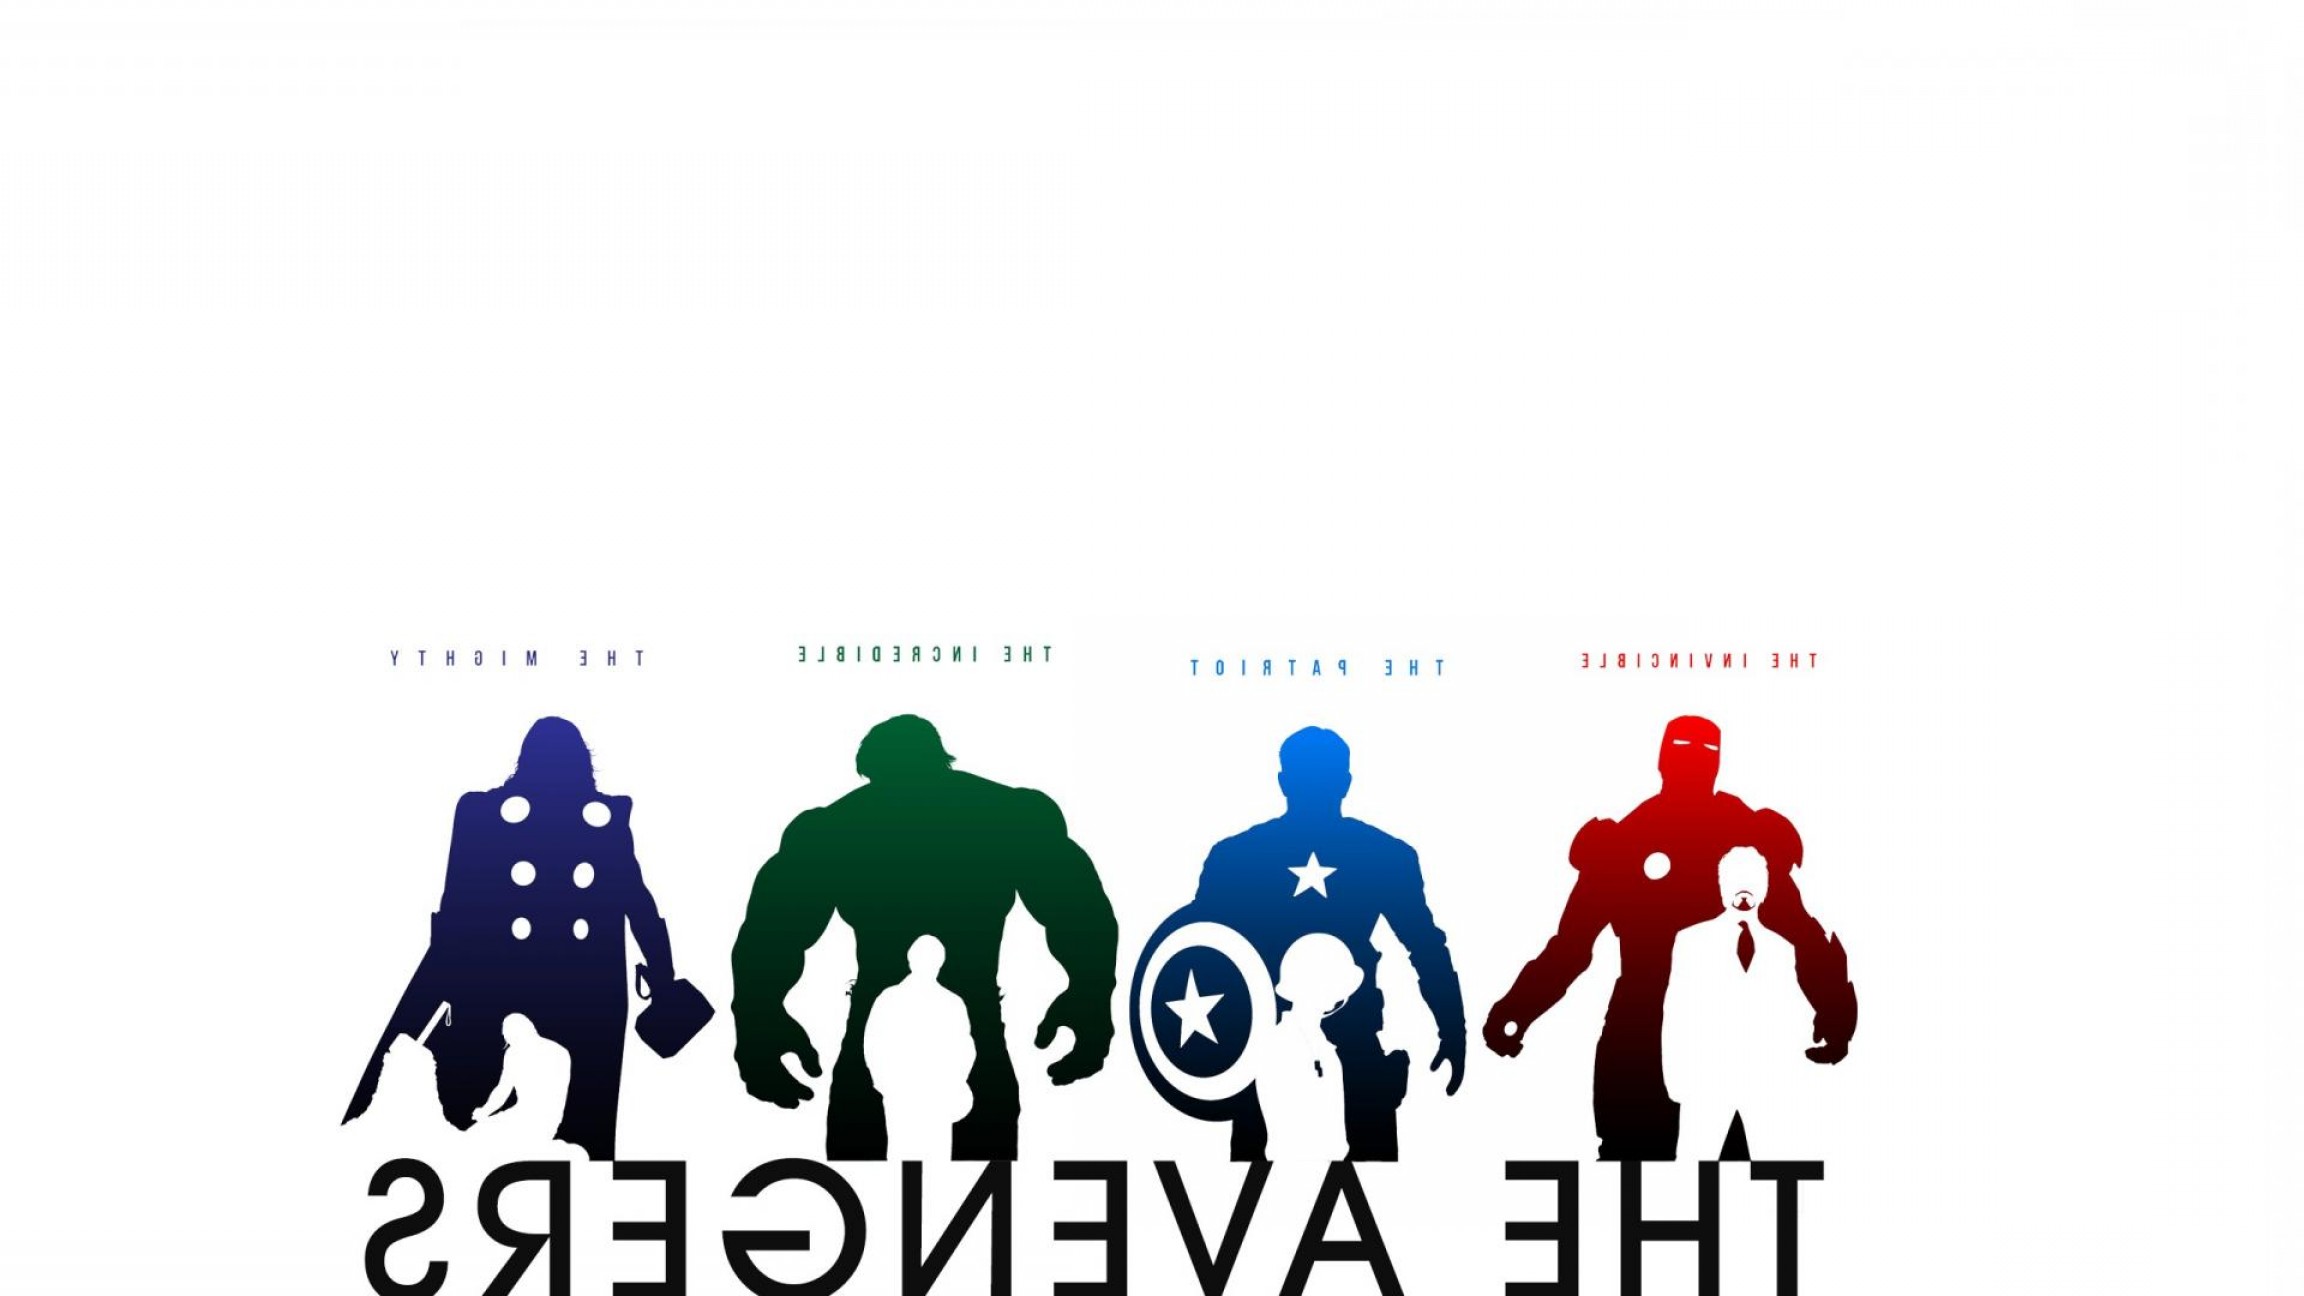 Silhouette Marvel Comics The Avengers White Background